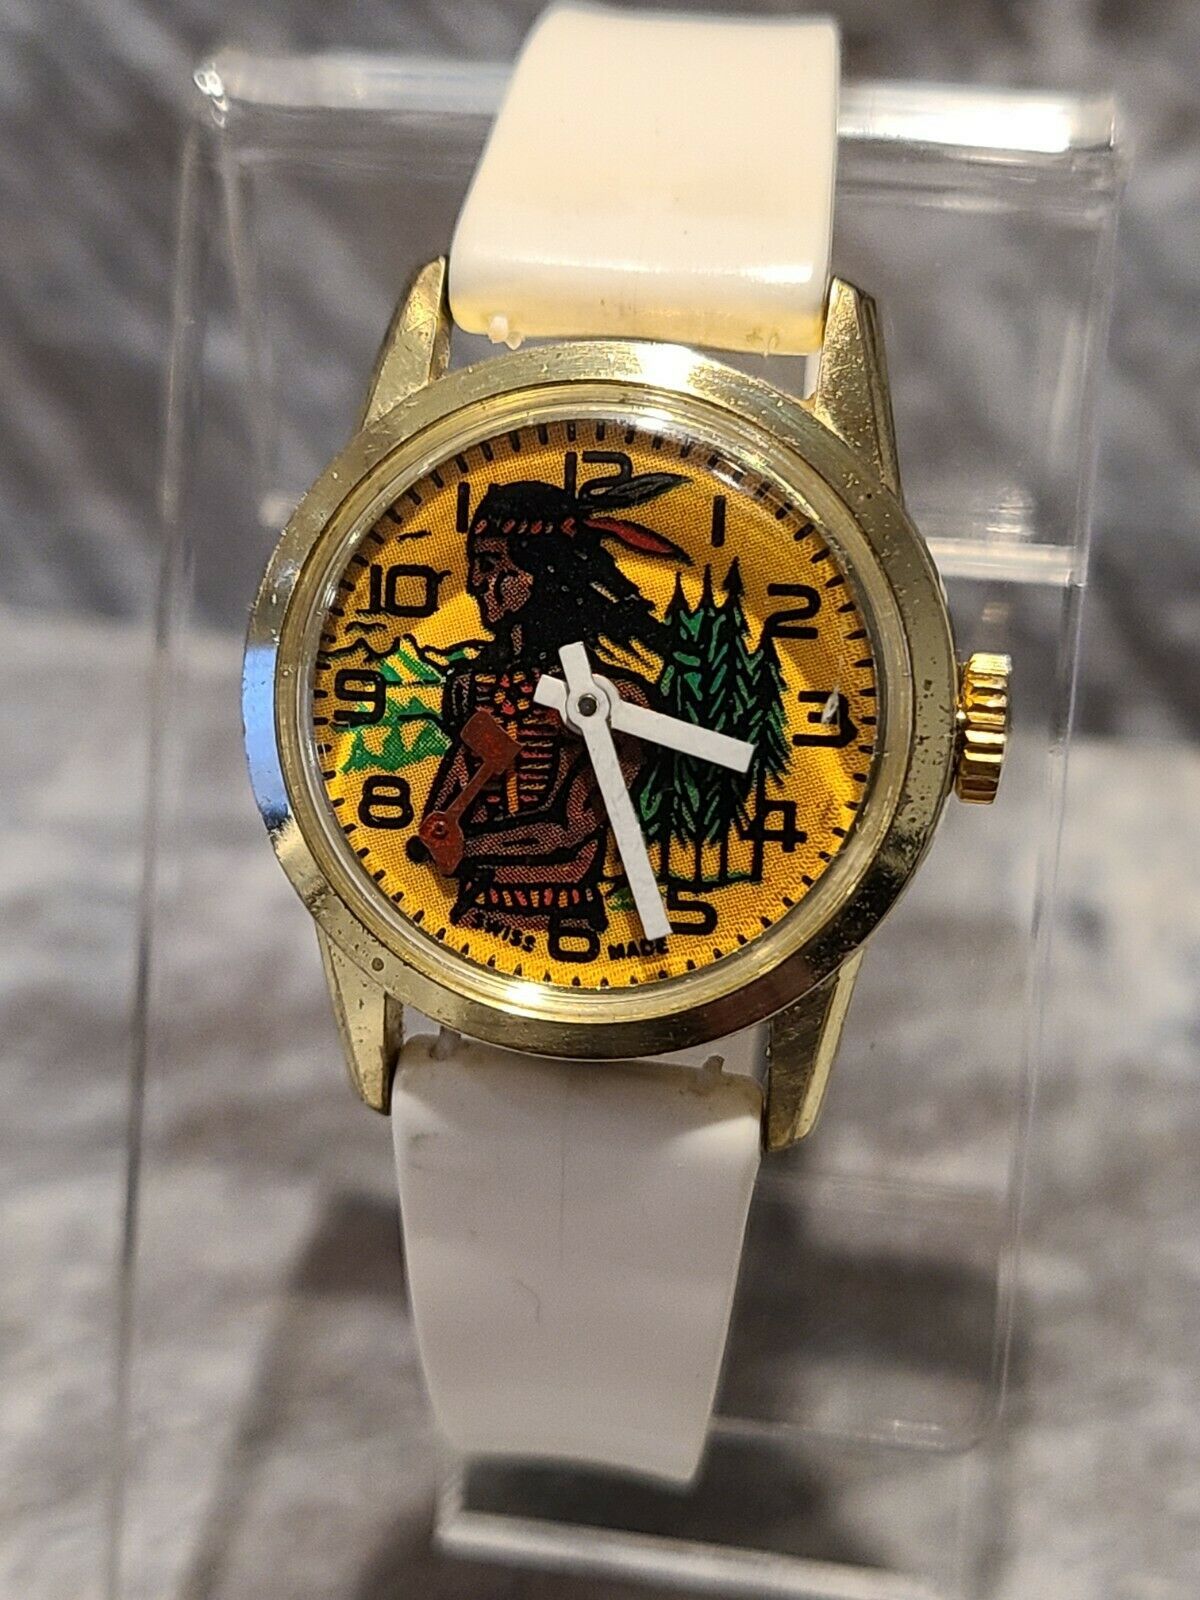 Vintage Webster Native American Wristwatch - $40.00